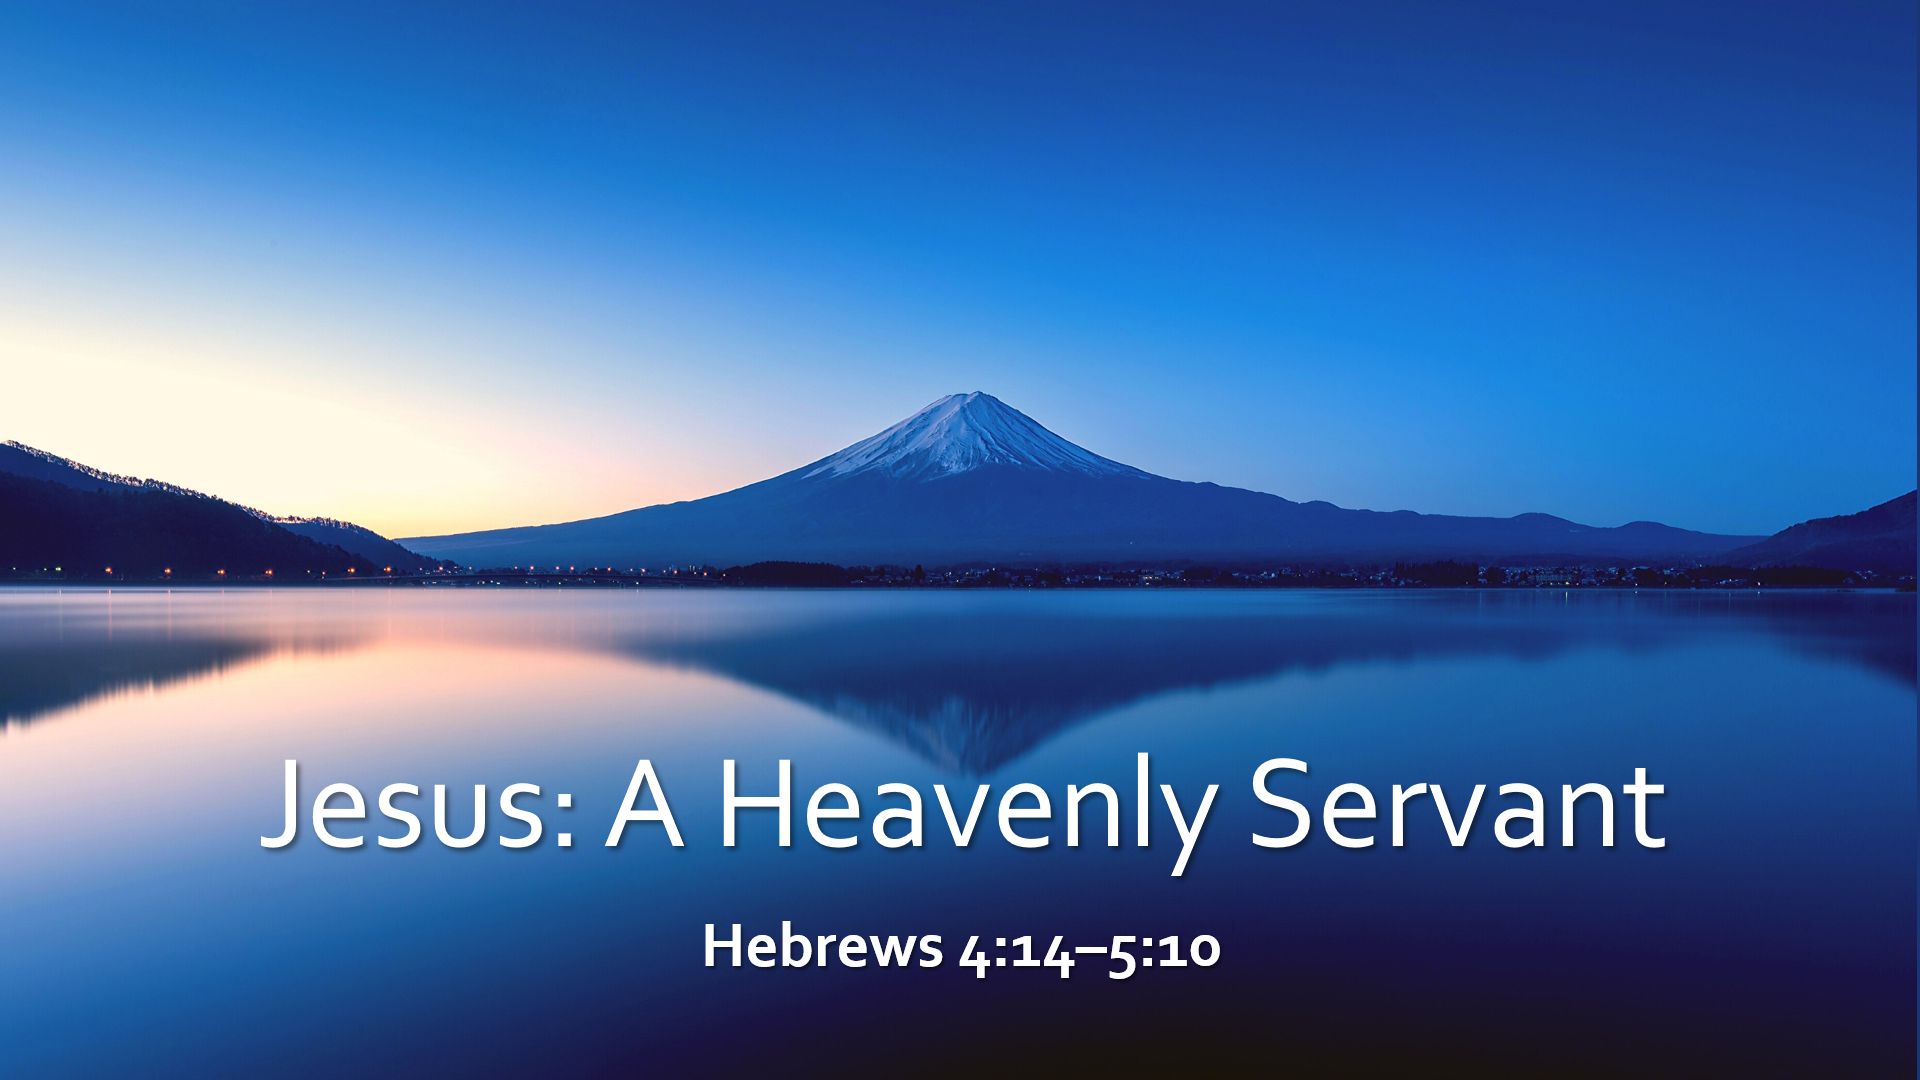 A Heavenly Servant